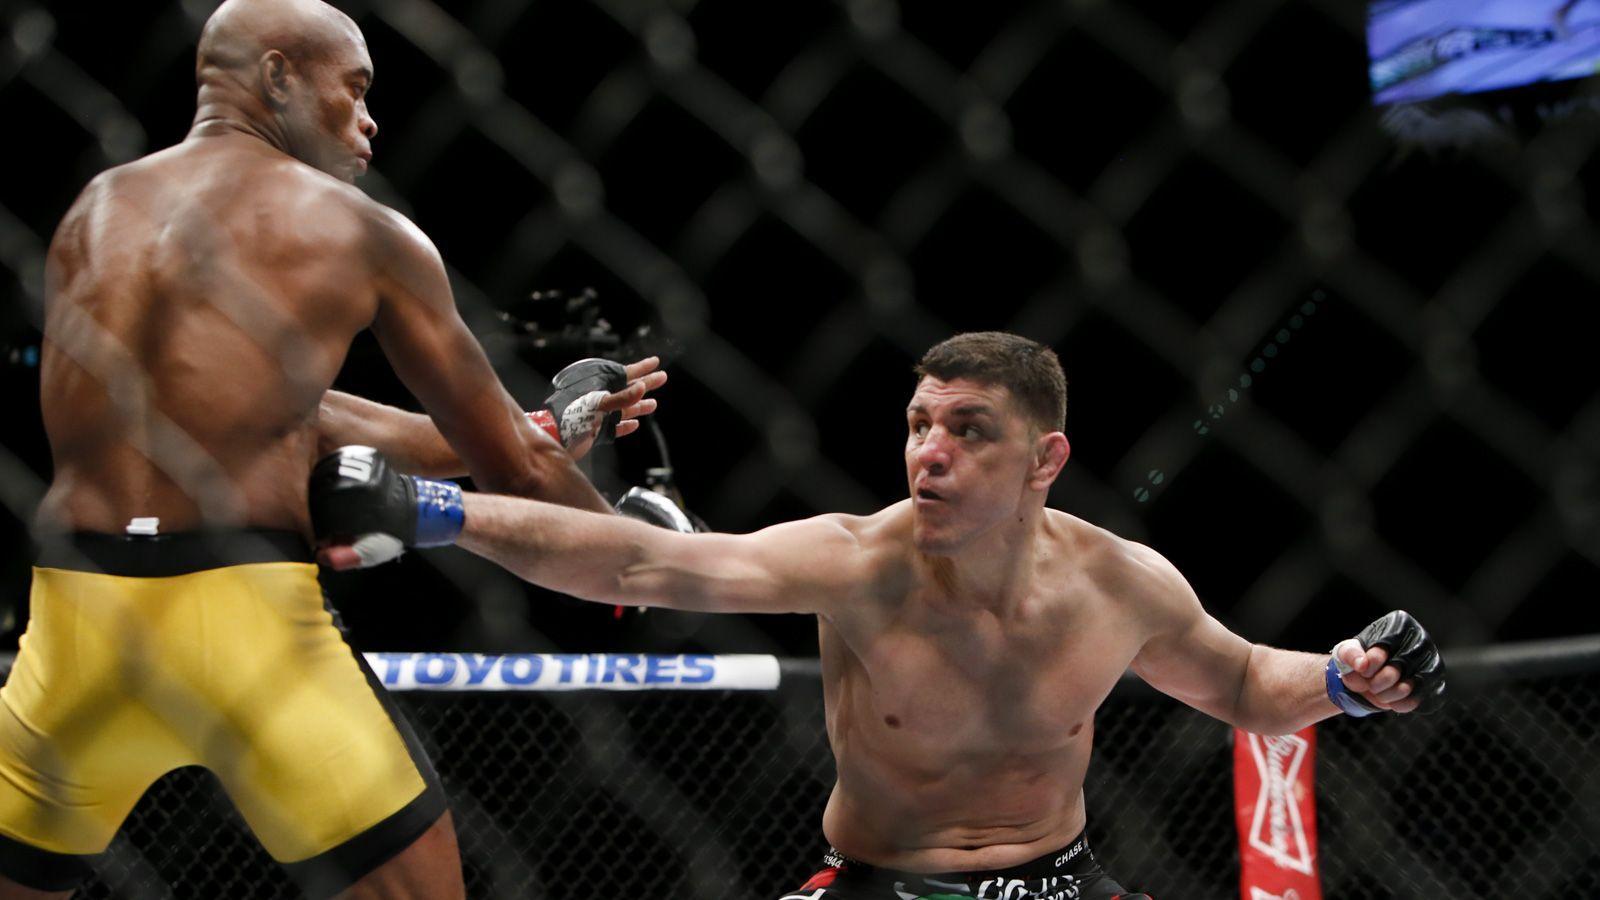 WATCH: Dana White Teases Nick Diaz Return to UFC